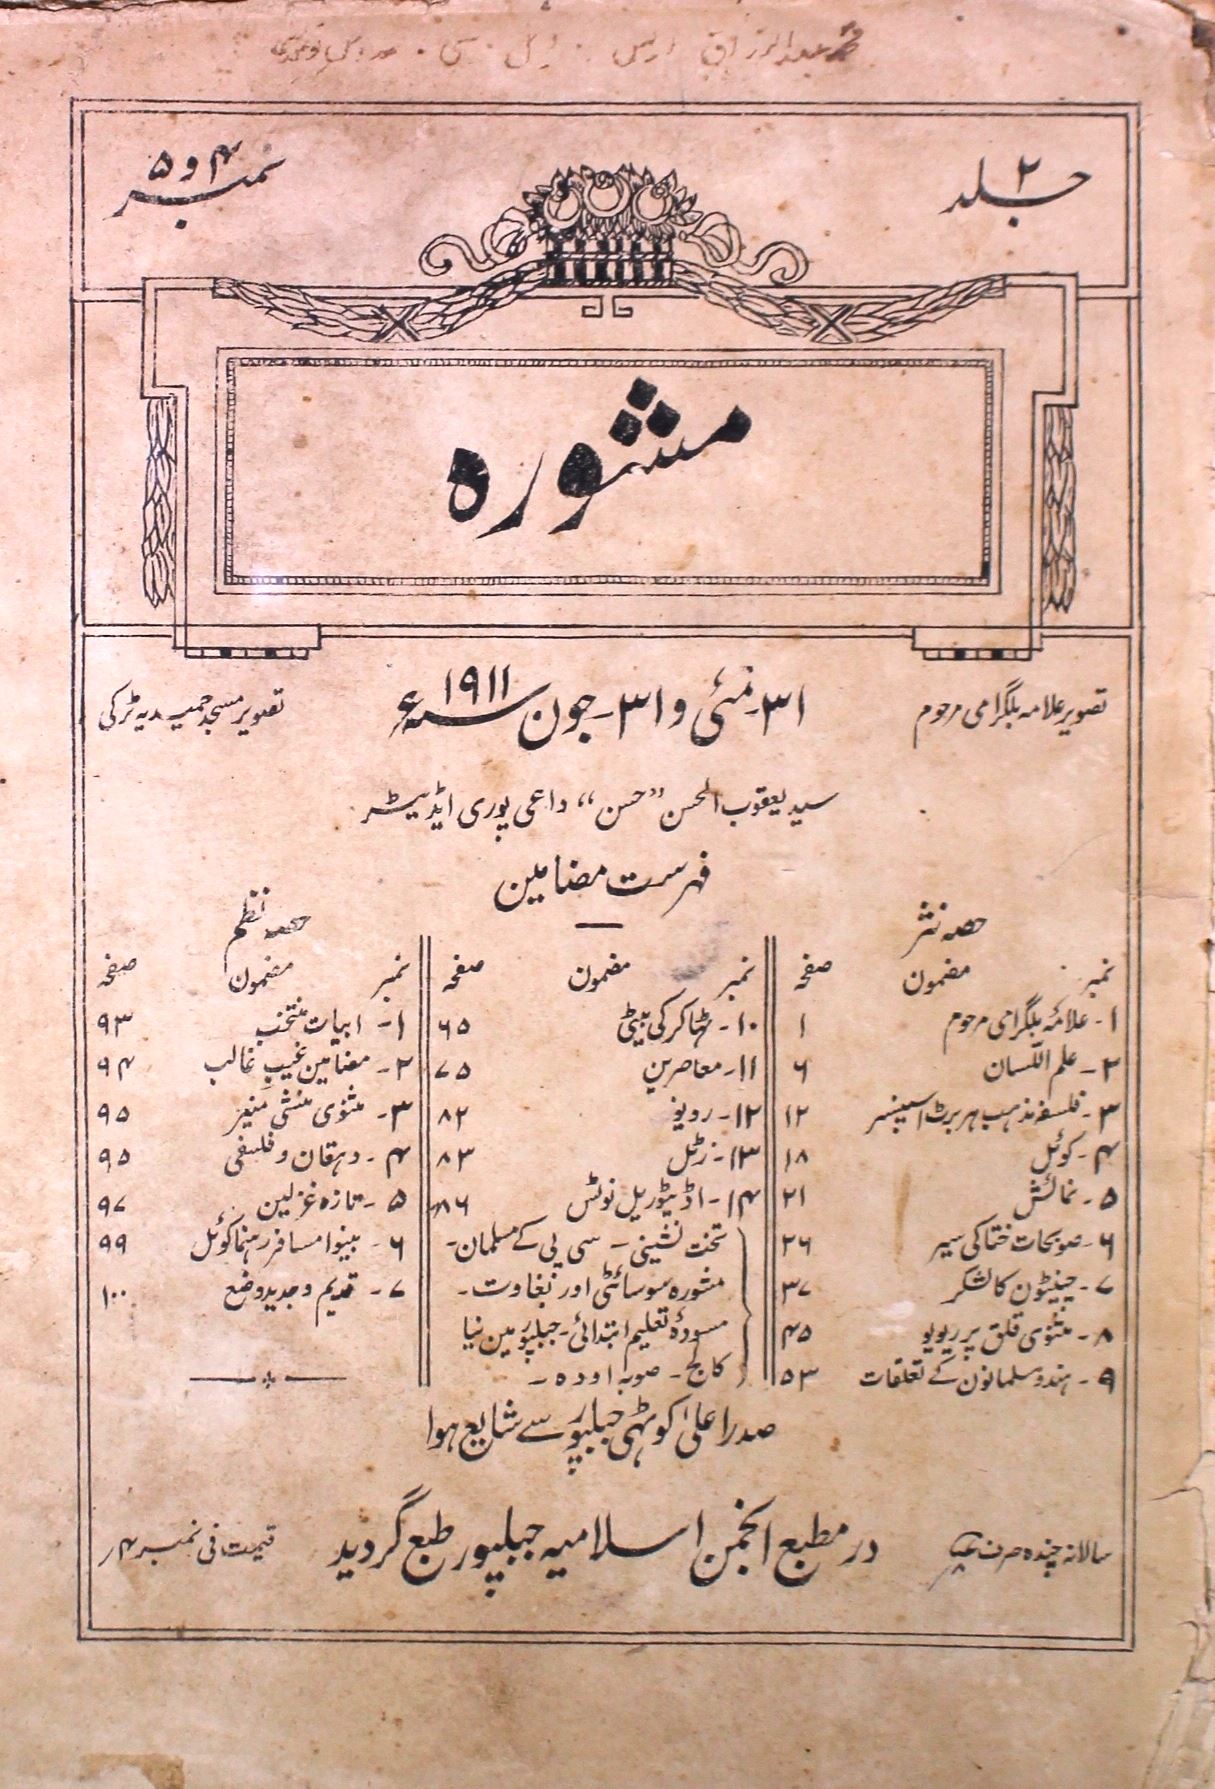 Mashwara Jild 2 No 4,5 May,June 1911-SVK-Shumara Number-004, 005